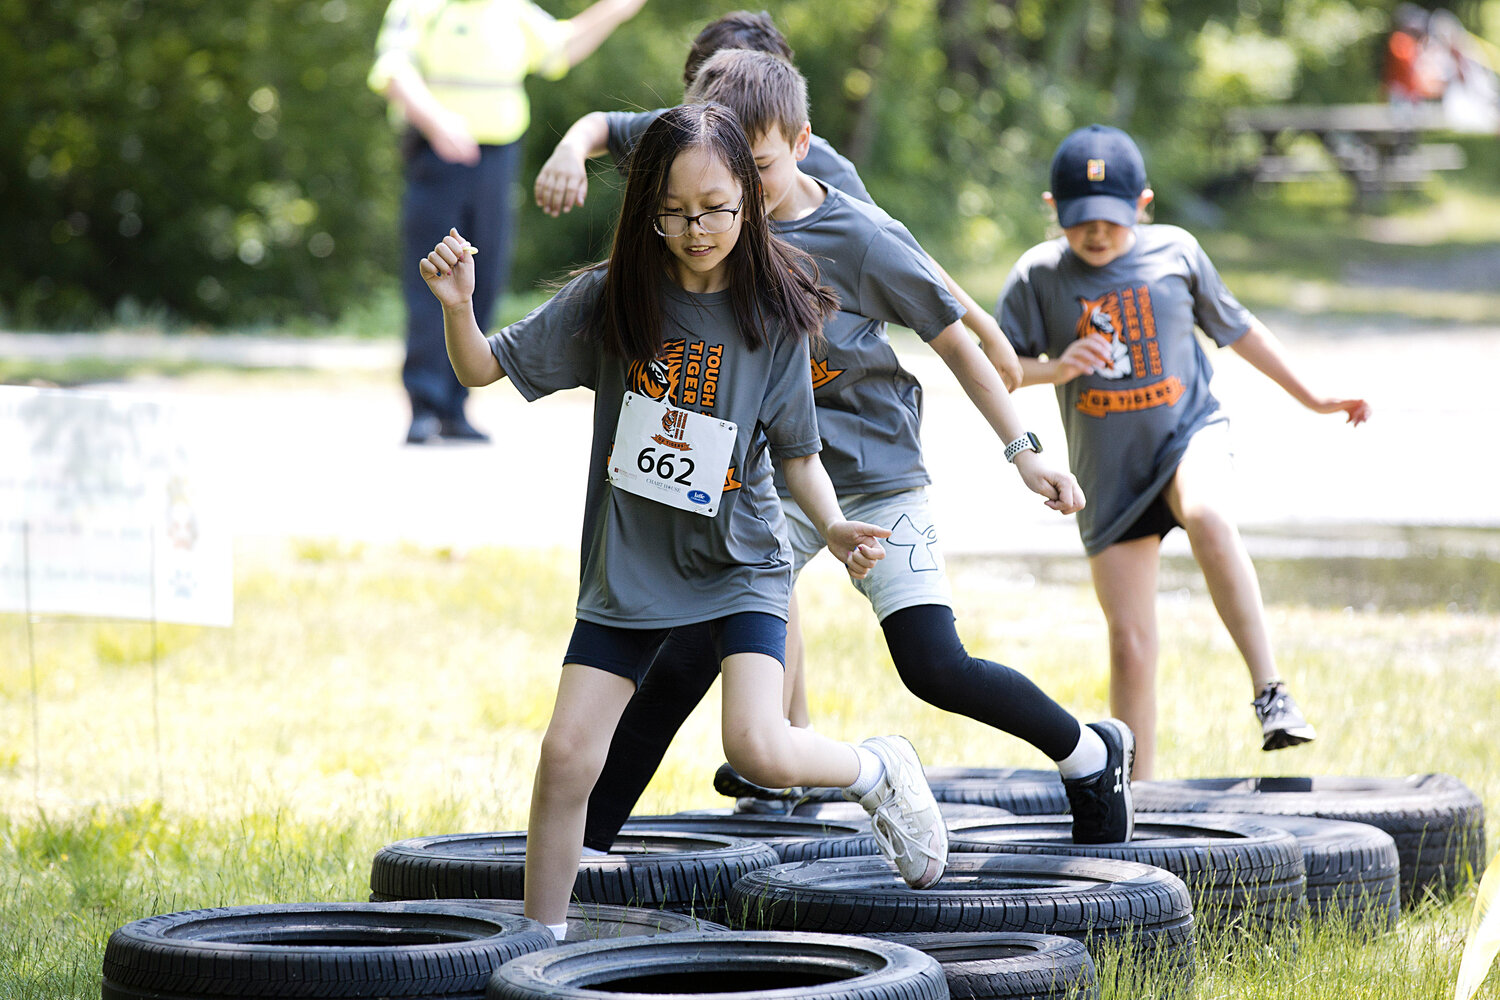 Children run through a tire obstacle.